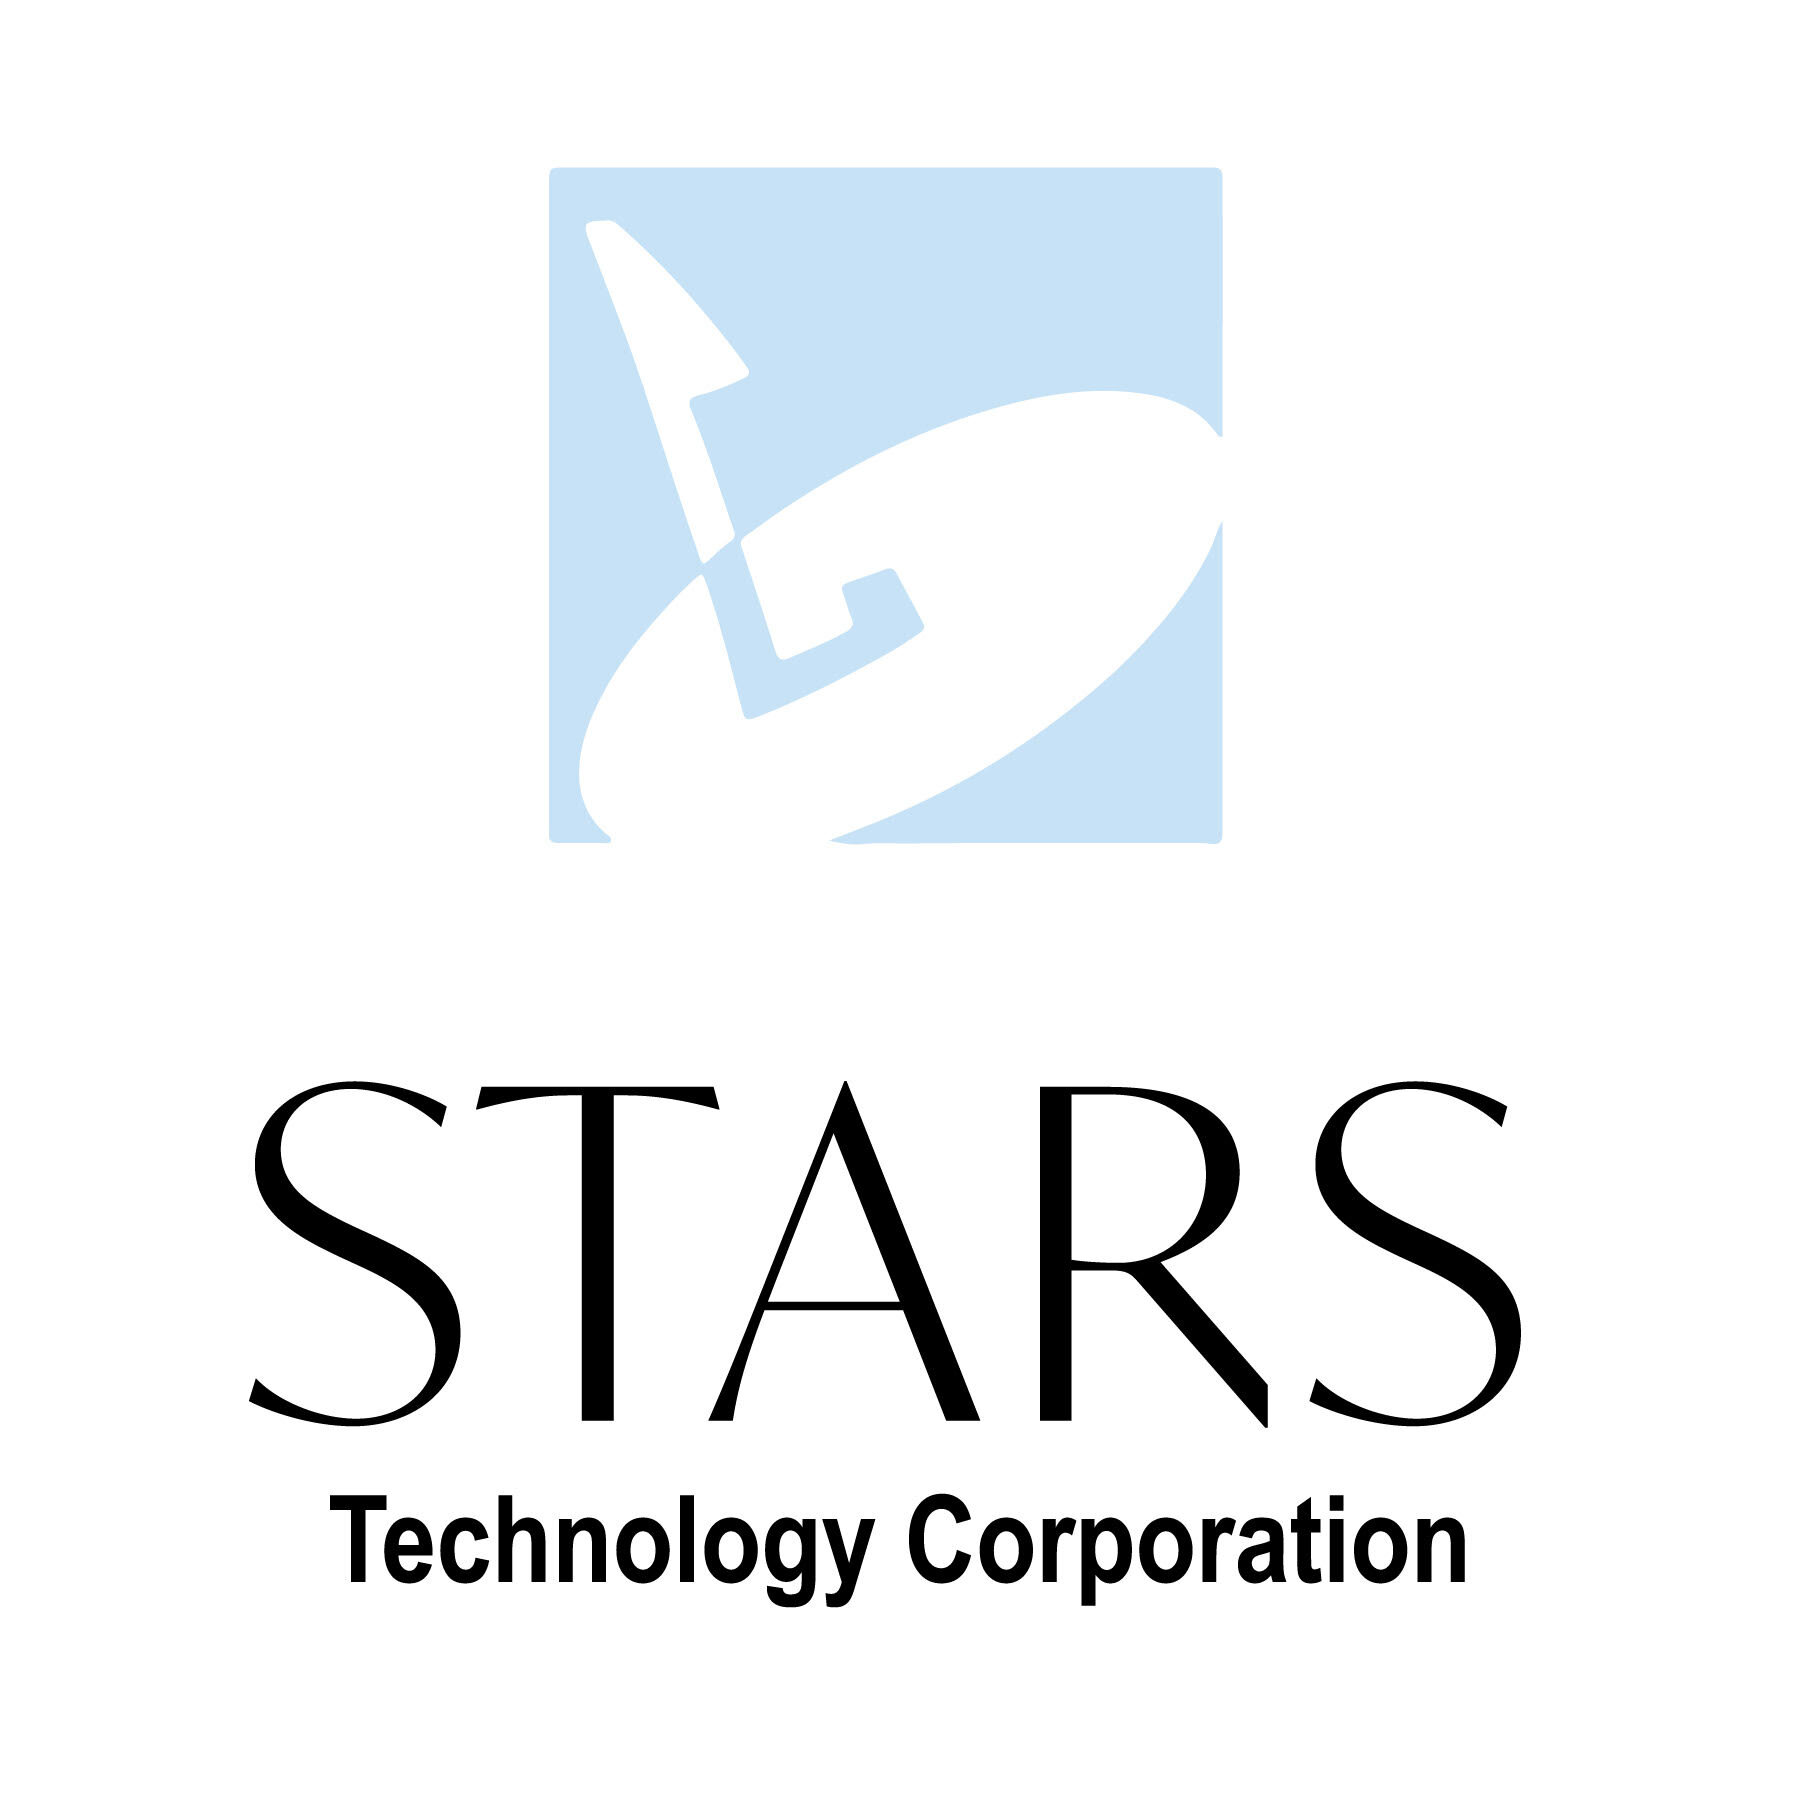 Stars Technology Corporation